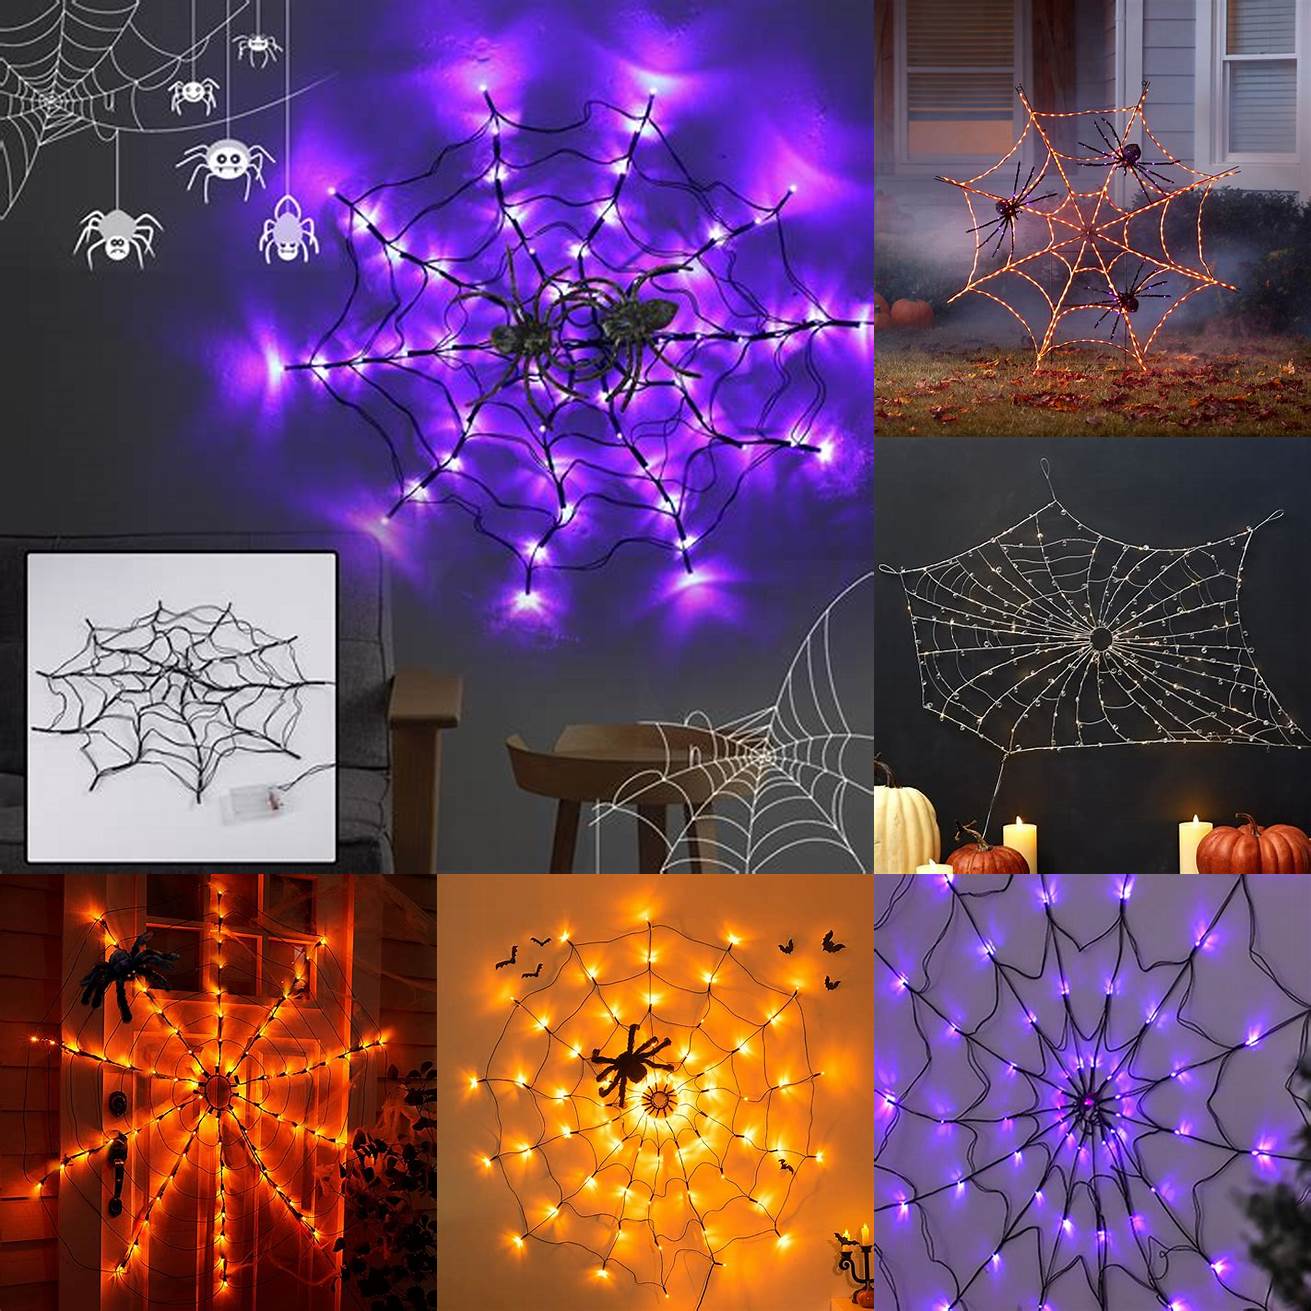 Spiderweb lights